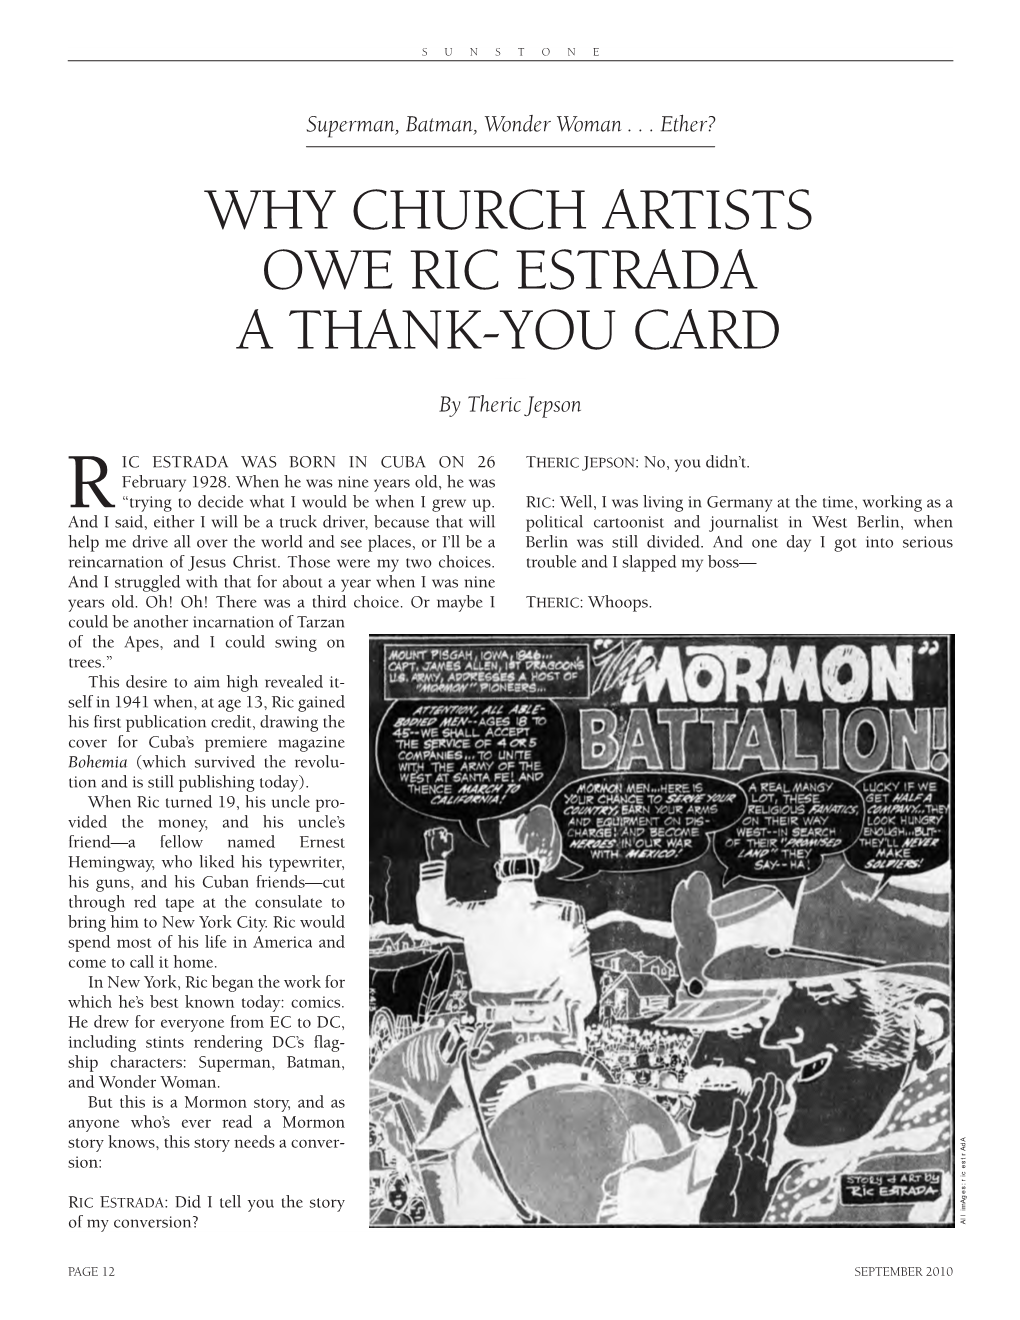 Why Church Artists Owe Ric Estrada a Thank-You Card